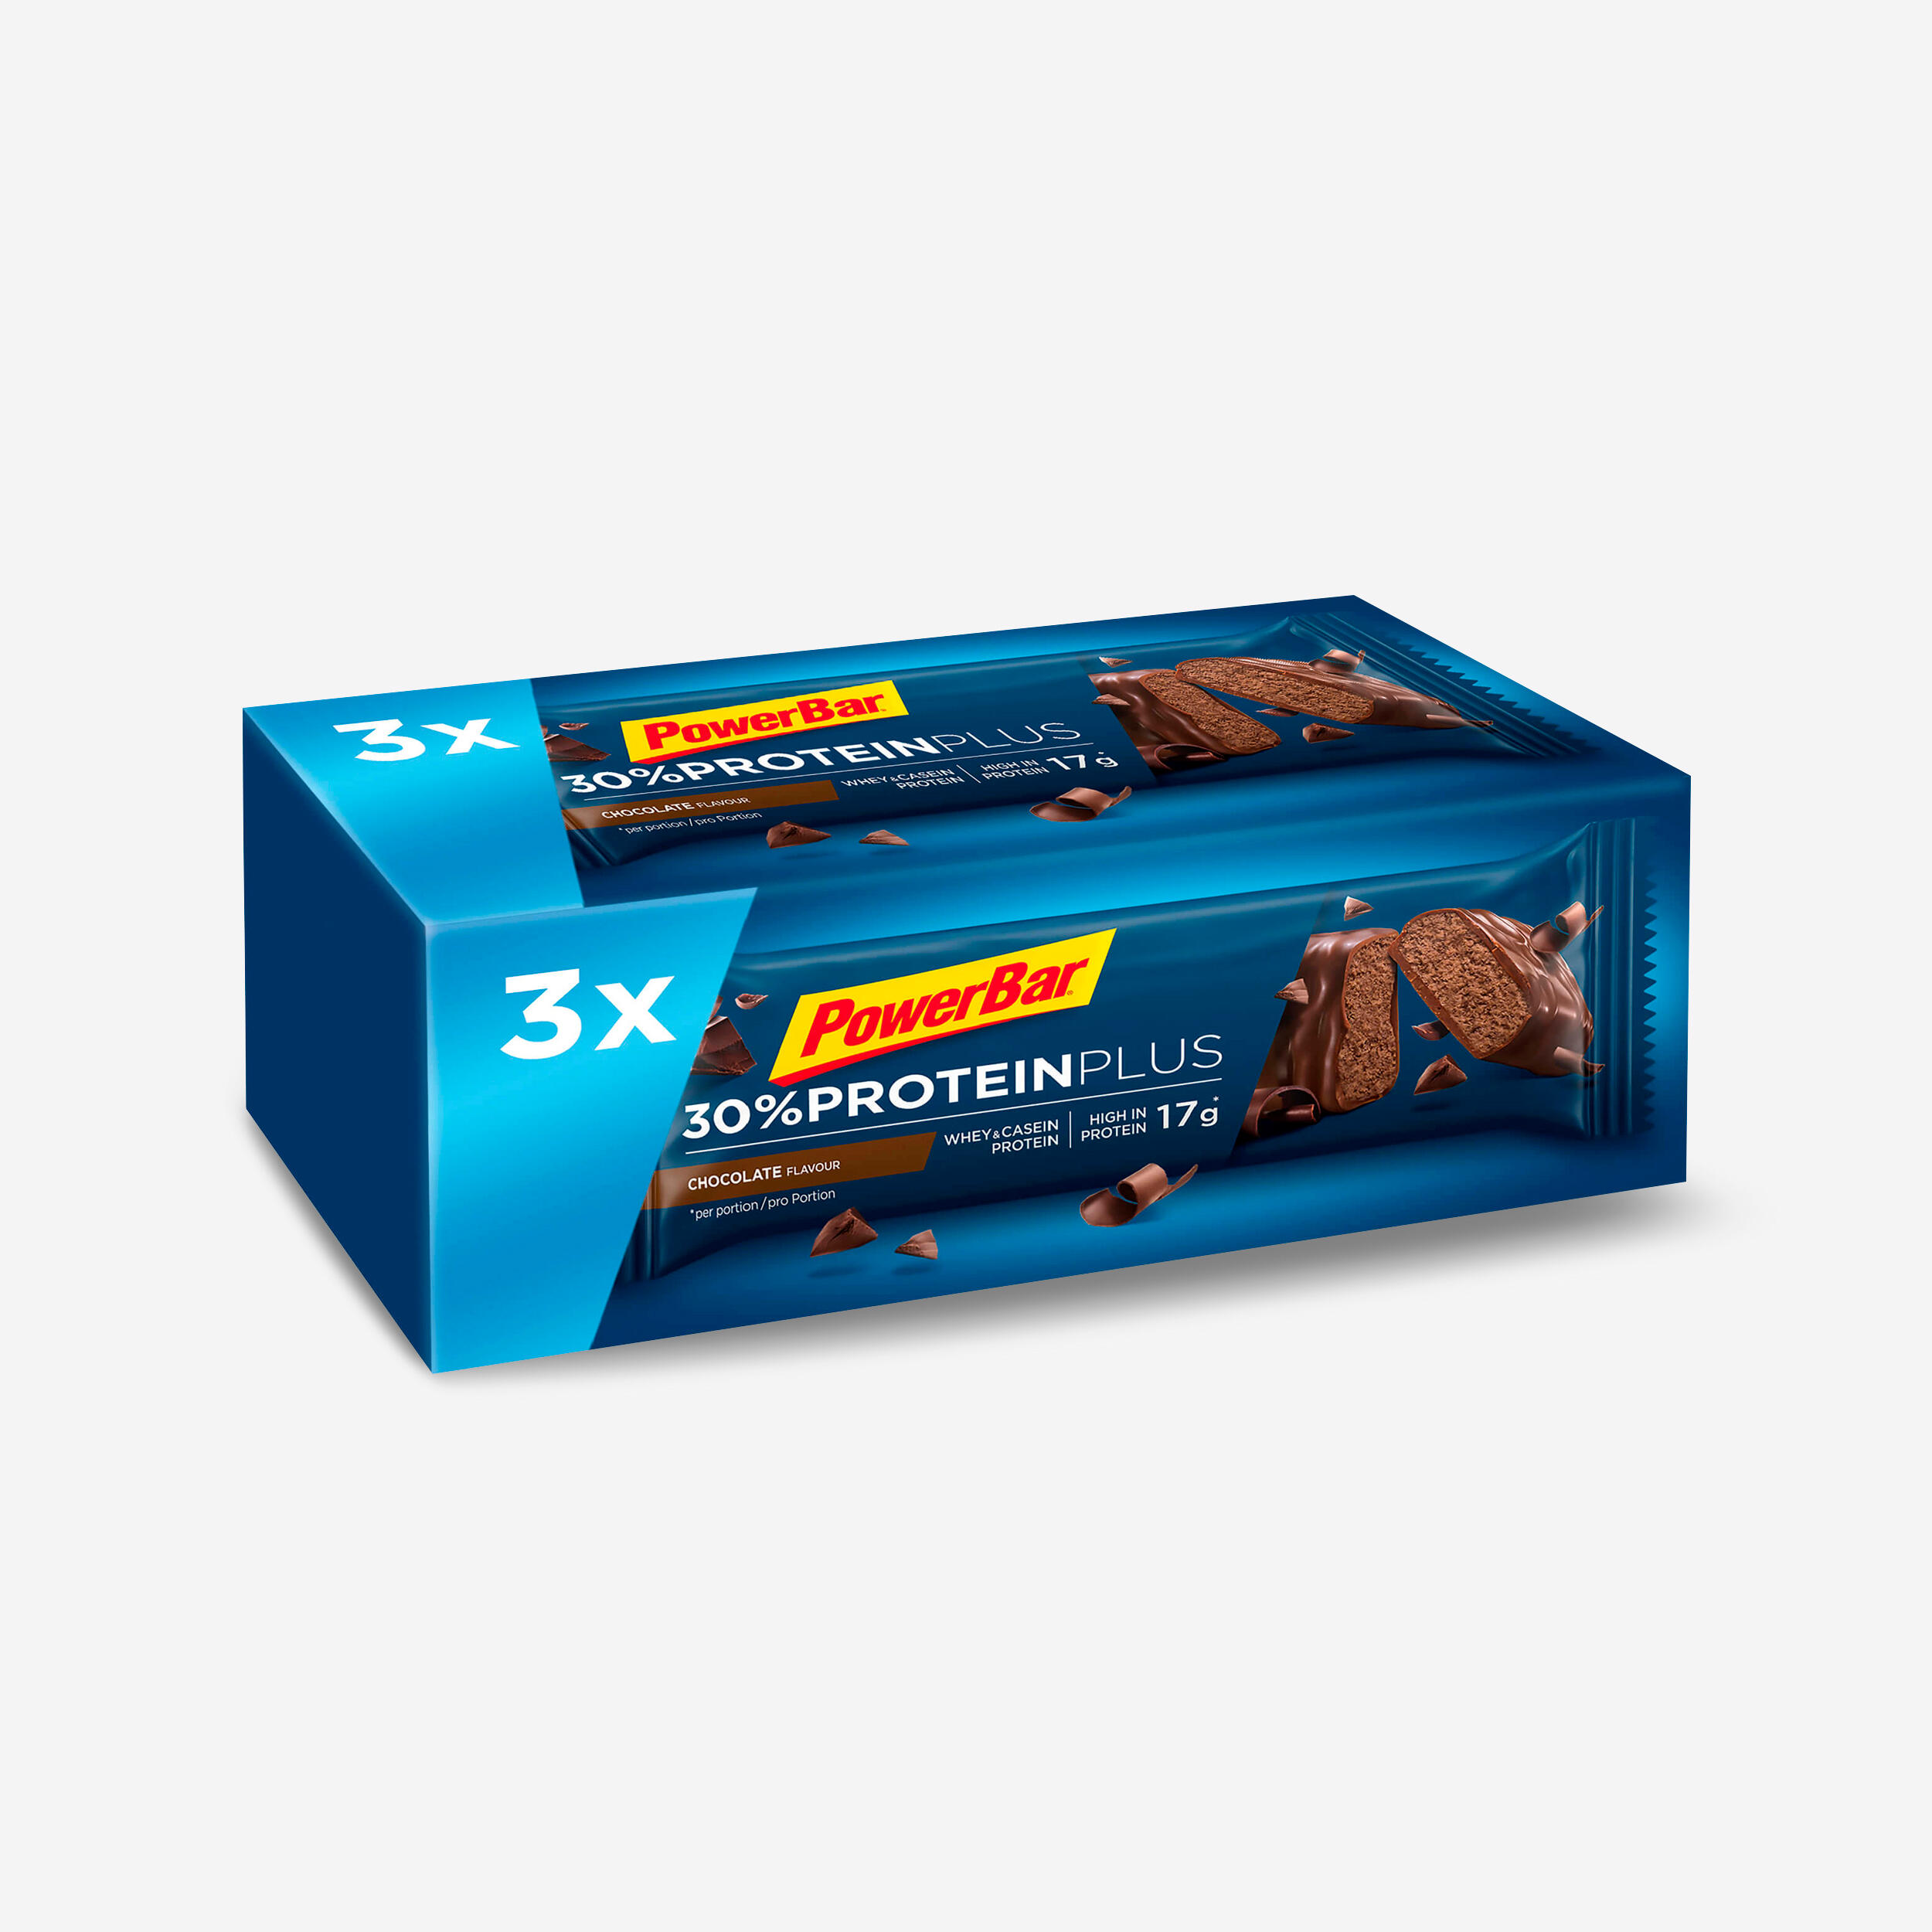 POWERBAR Protein Plus Protein Bar 3x55g - chocolate